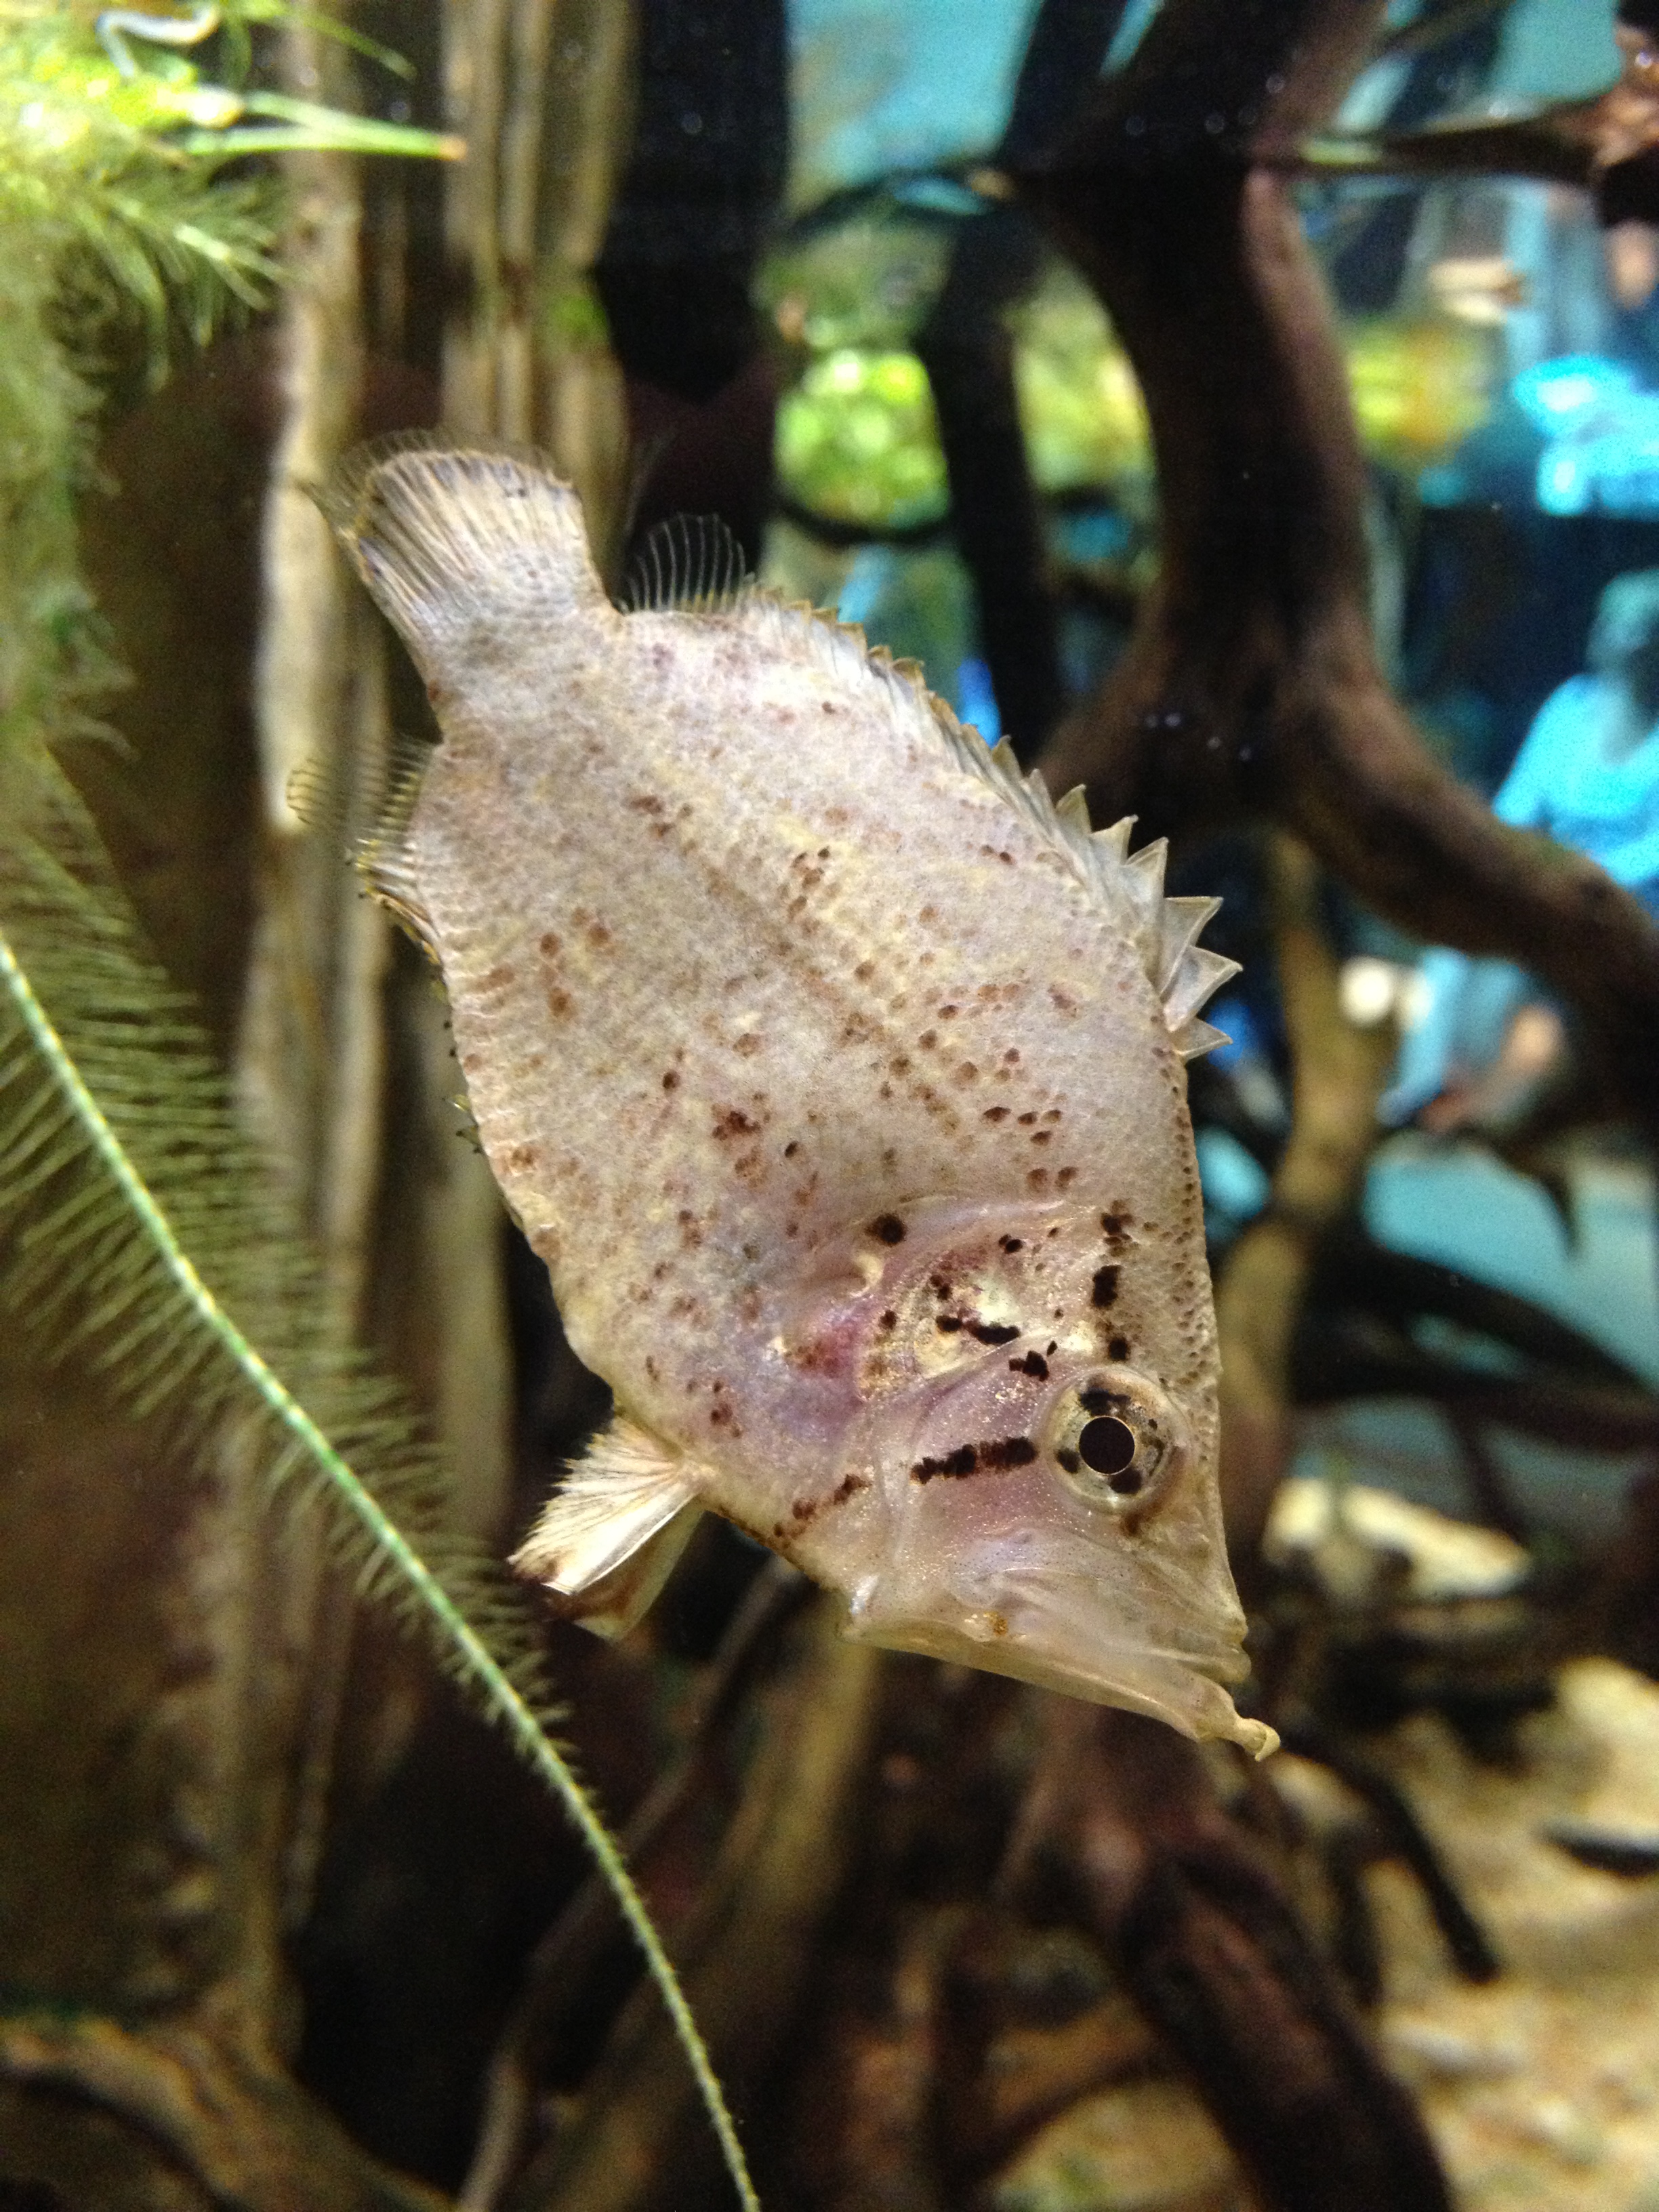 Pretty Amazon leaffish